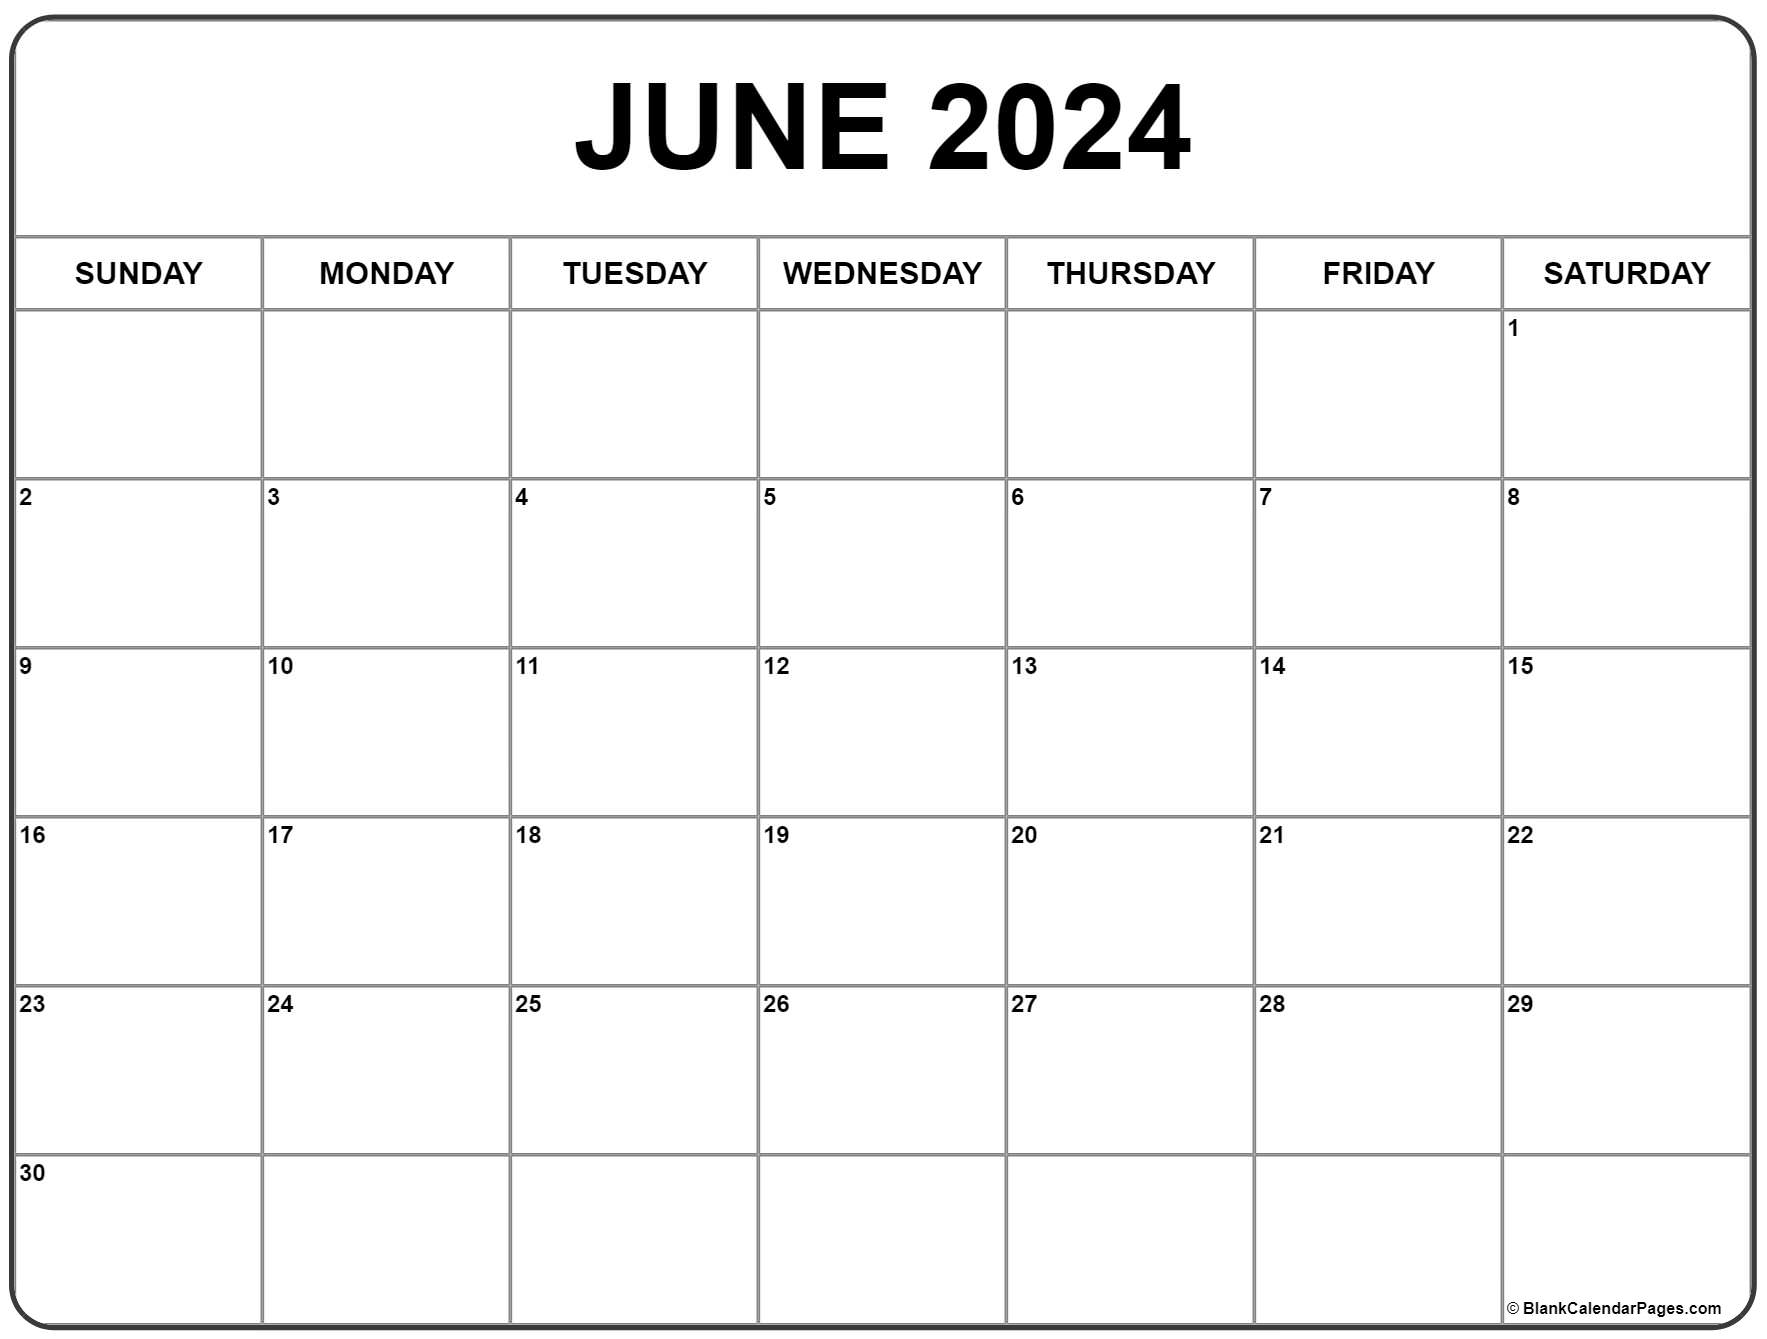 June 2024 Calendar | Free Printable Calendar for Free June Printable Calendar 2024